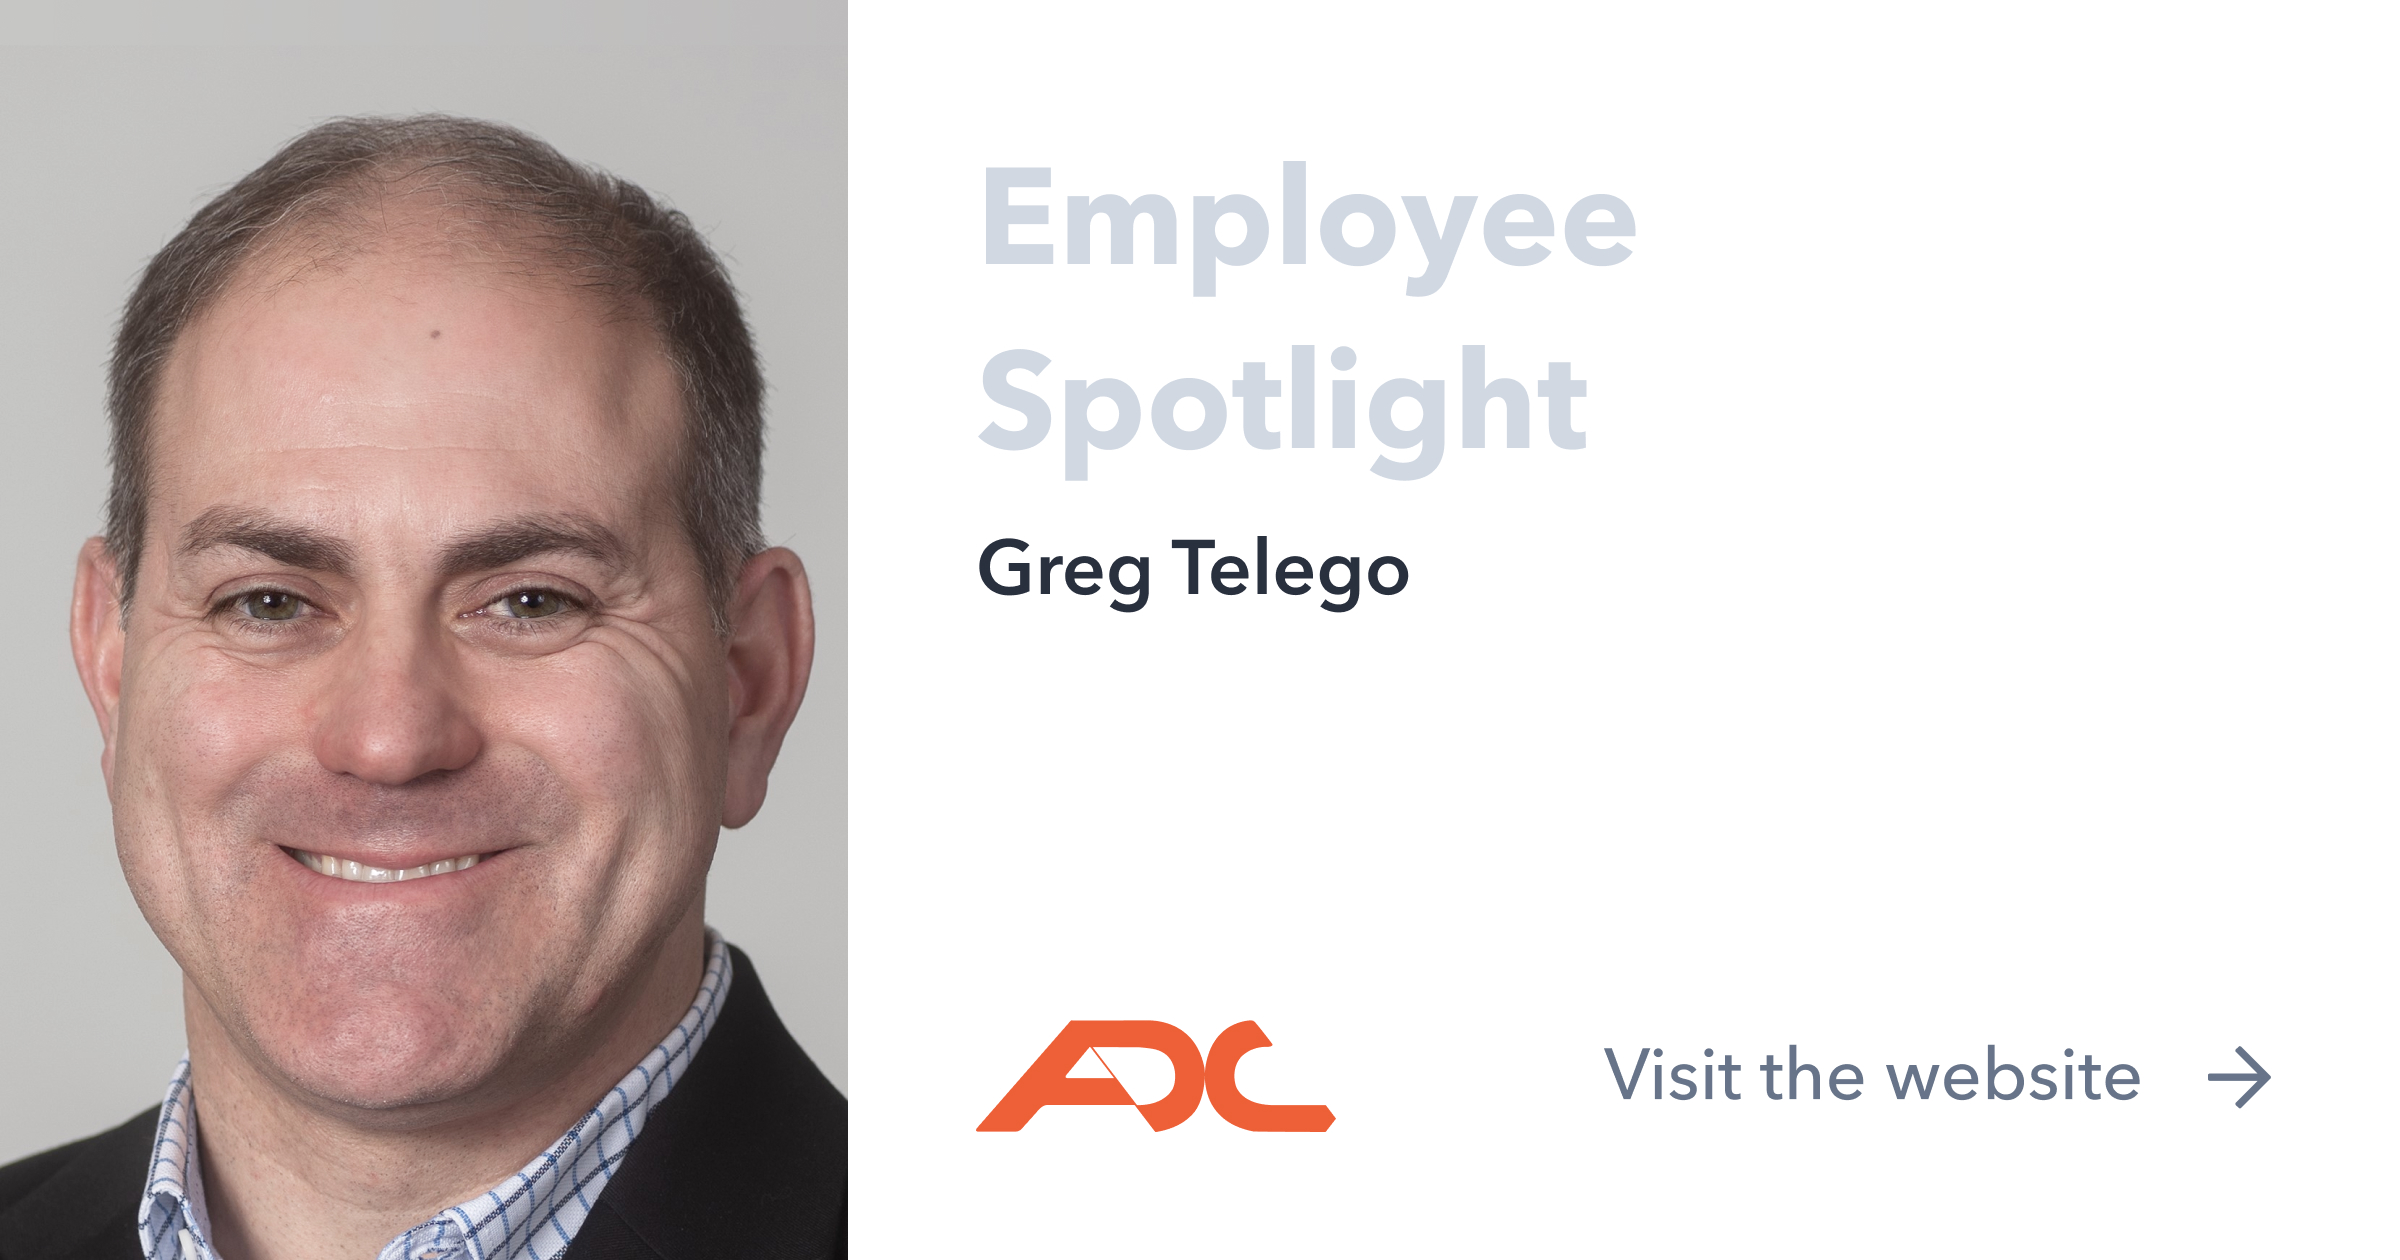 Employee Spotlight on Greg Telego